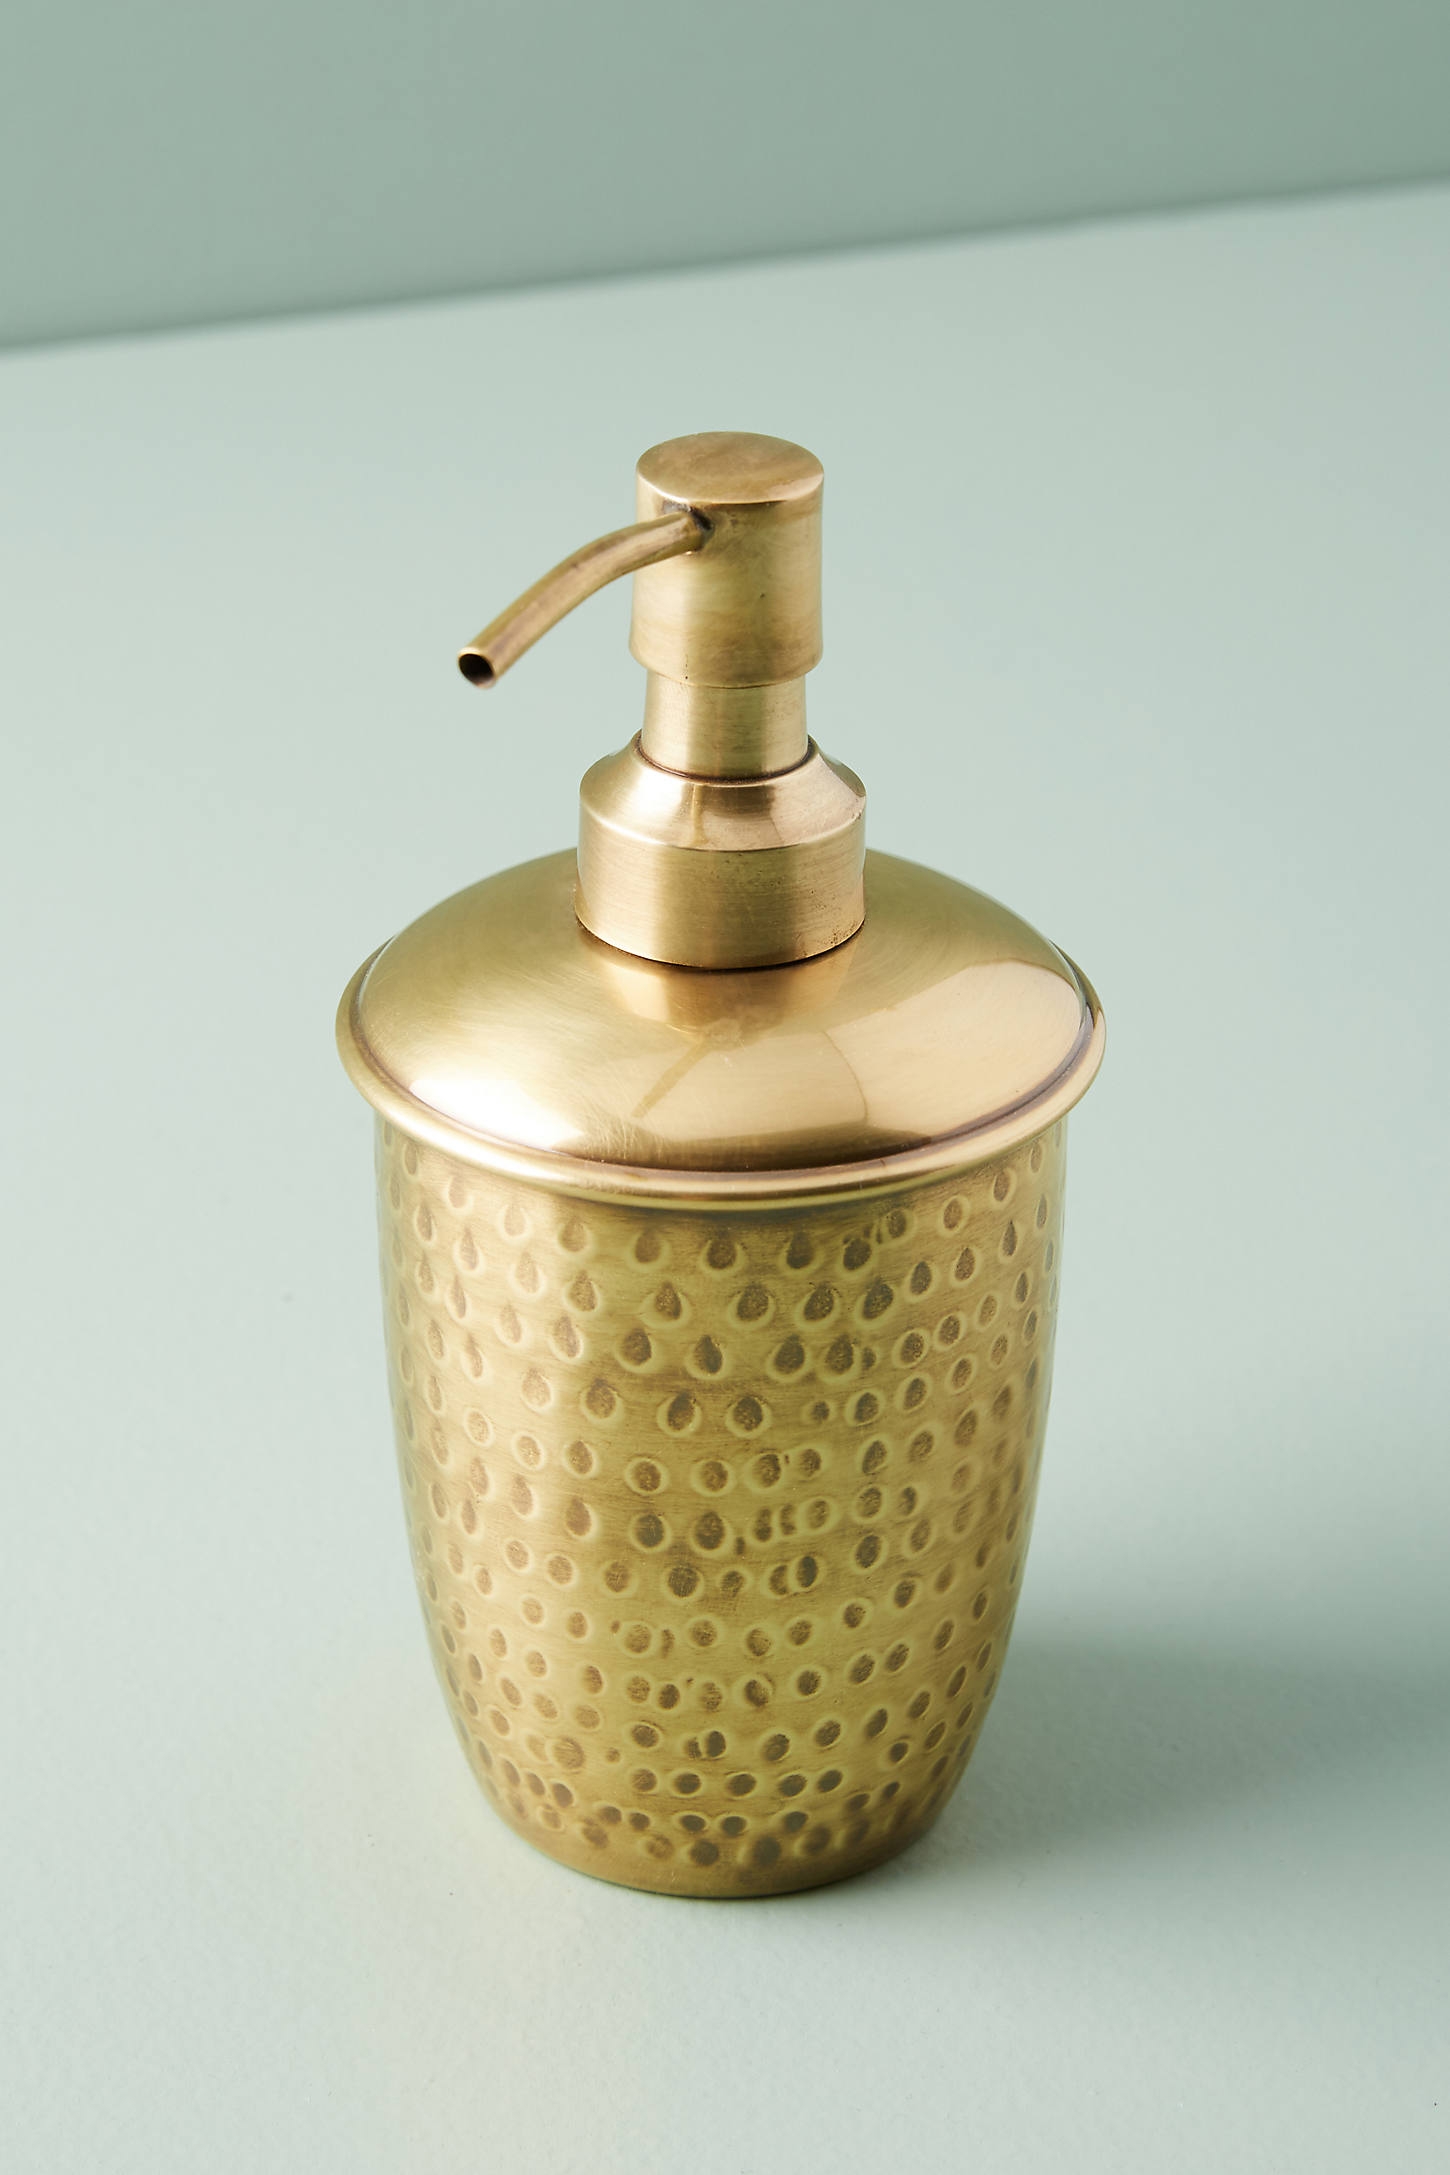 Hammered Brass Bath Collection: Soap Dispenser - Image 0